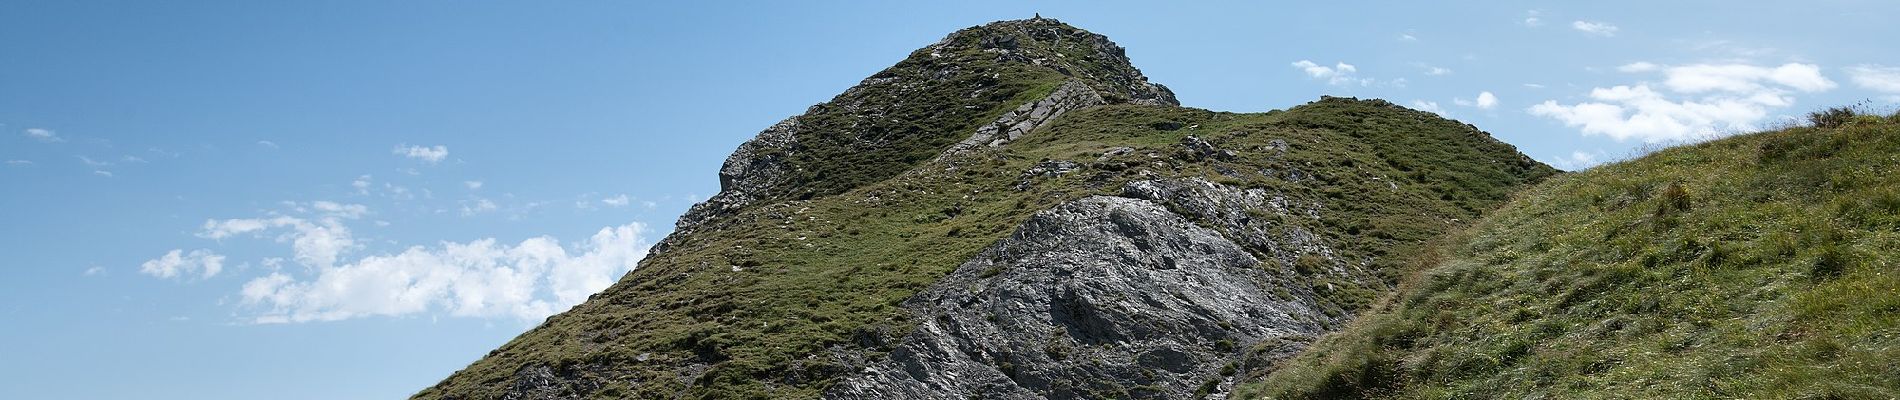 Tocht Te voet Ventasso - Cerreto dell'Alpi - Capiola - Costa della Brancia - Monte Casarola - Photo